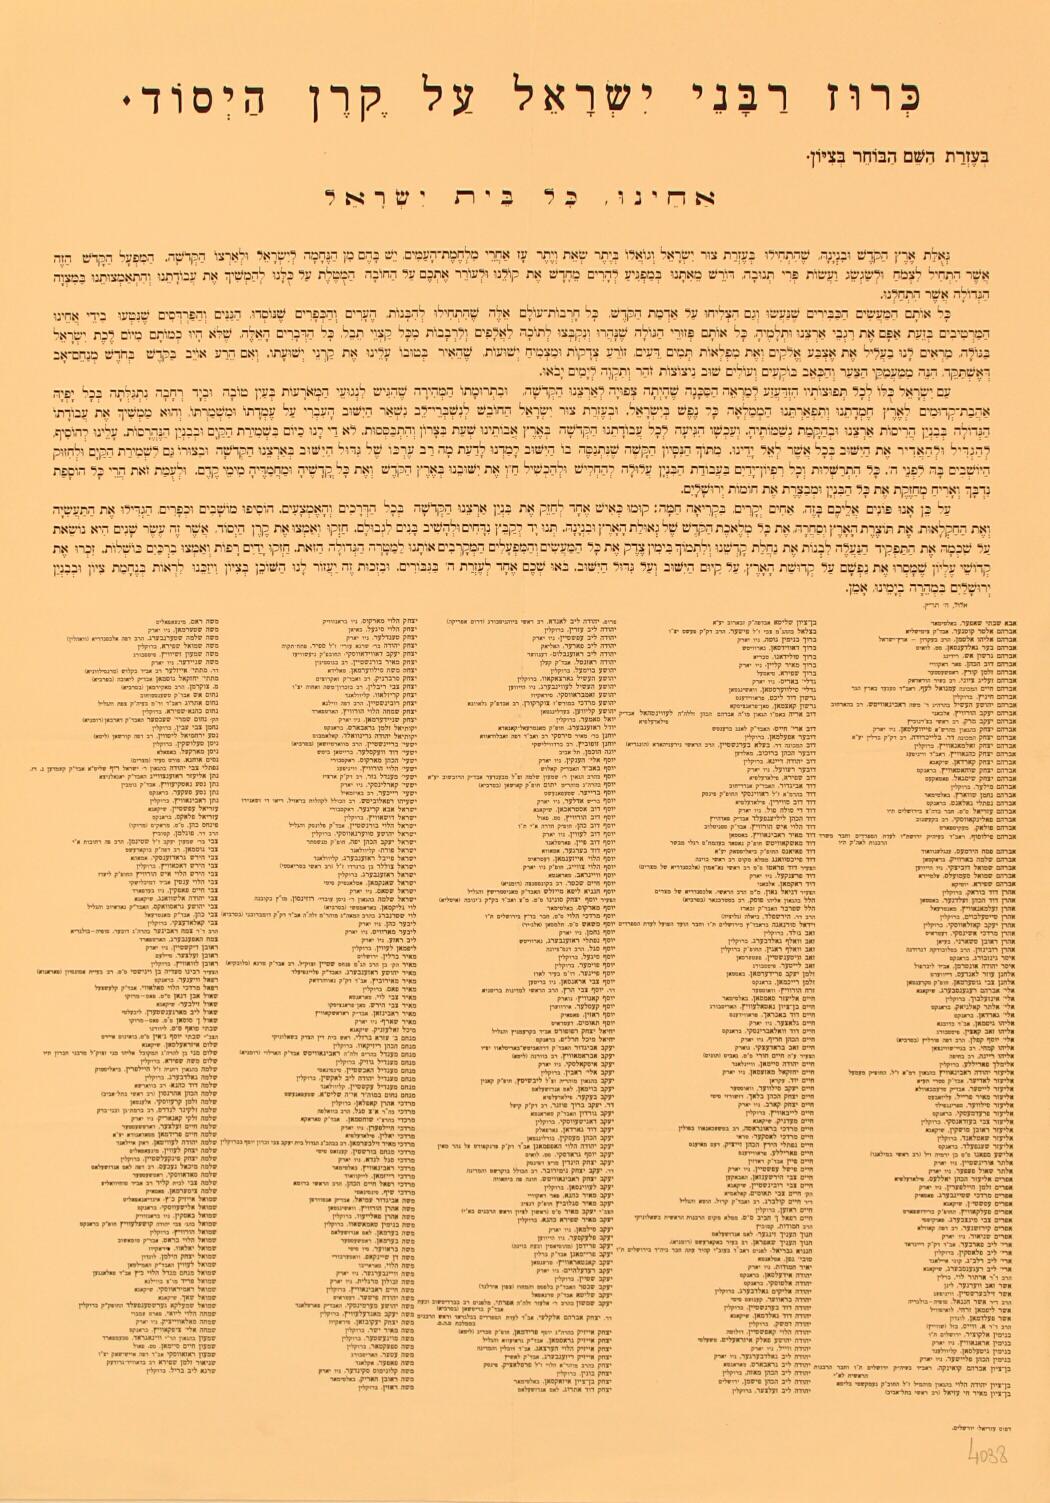 A proclamação de 500 rabinos que pedia apoio para as atividades do Keren Hayesod, 1939